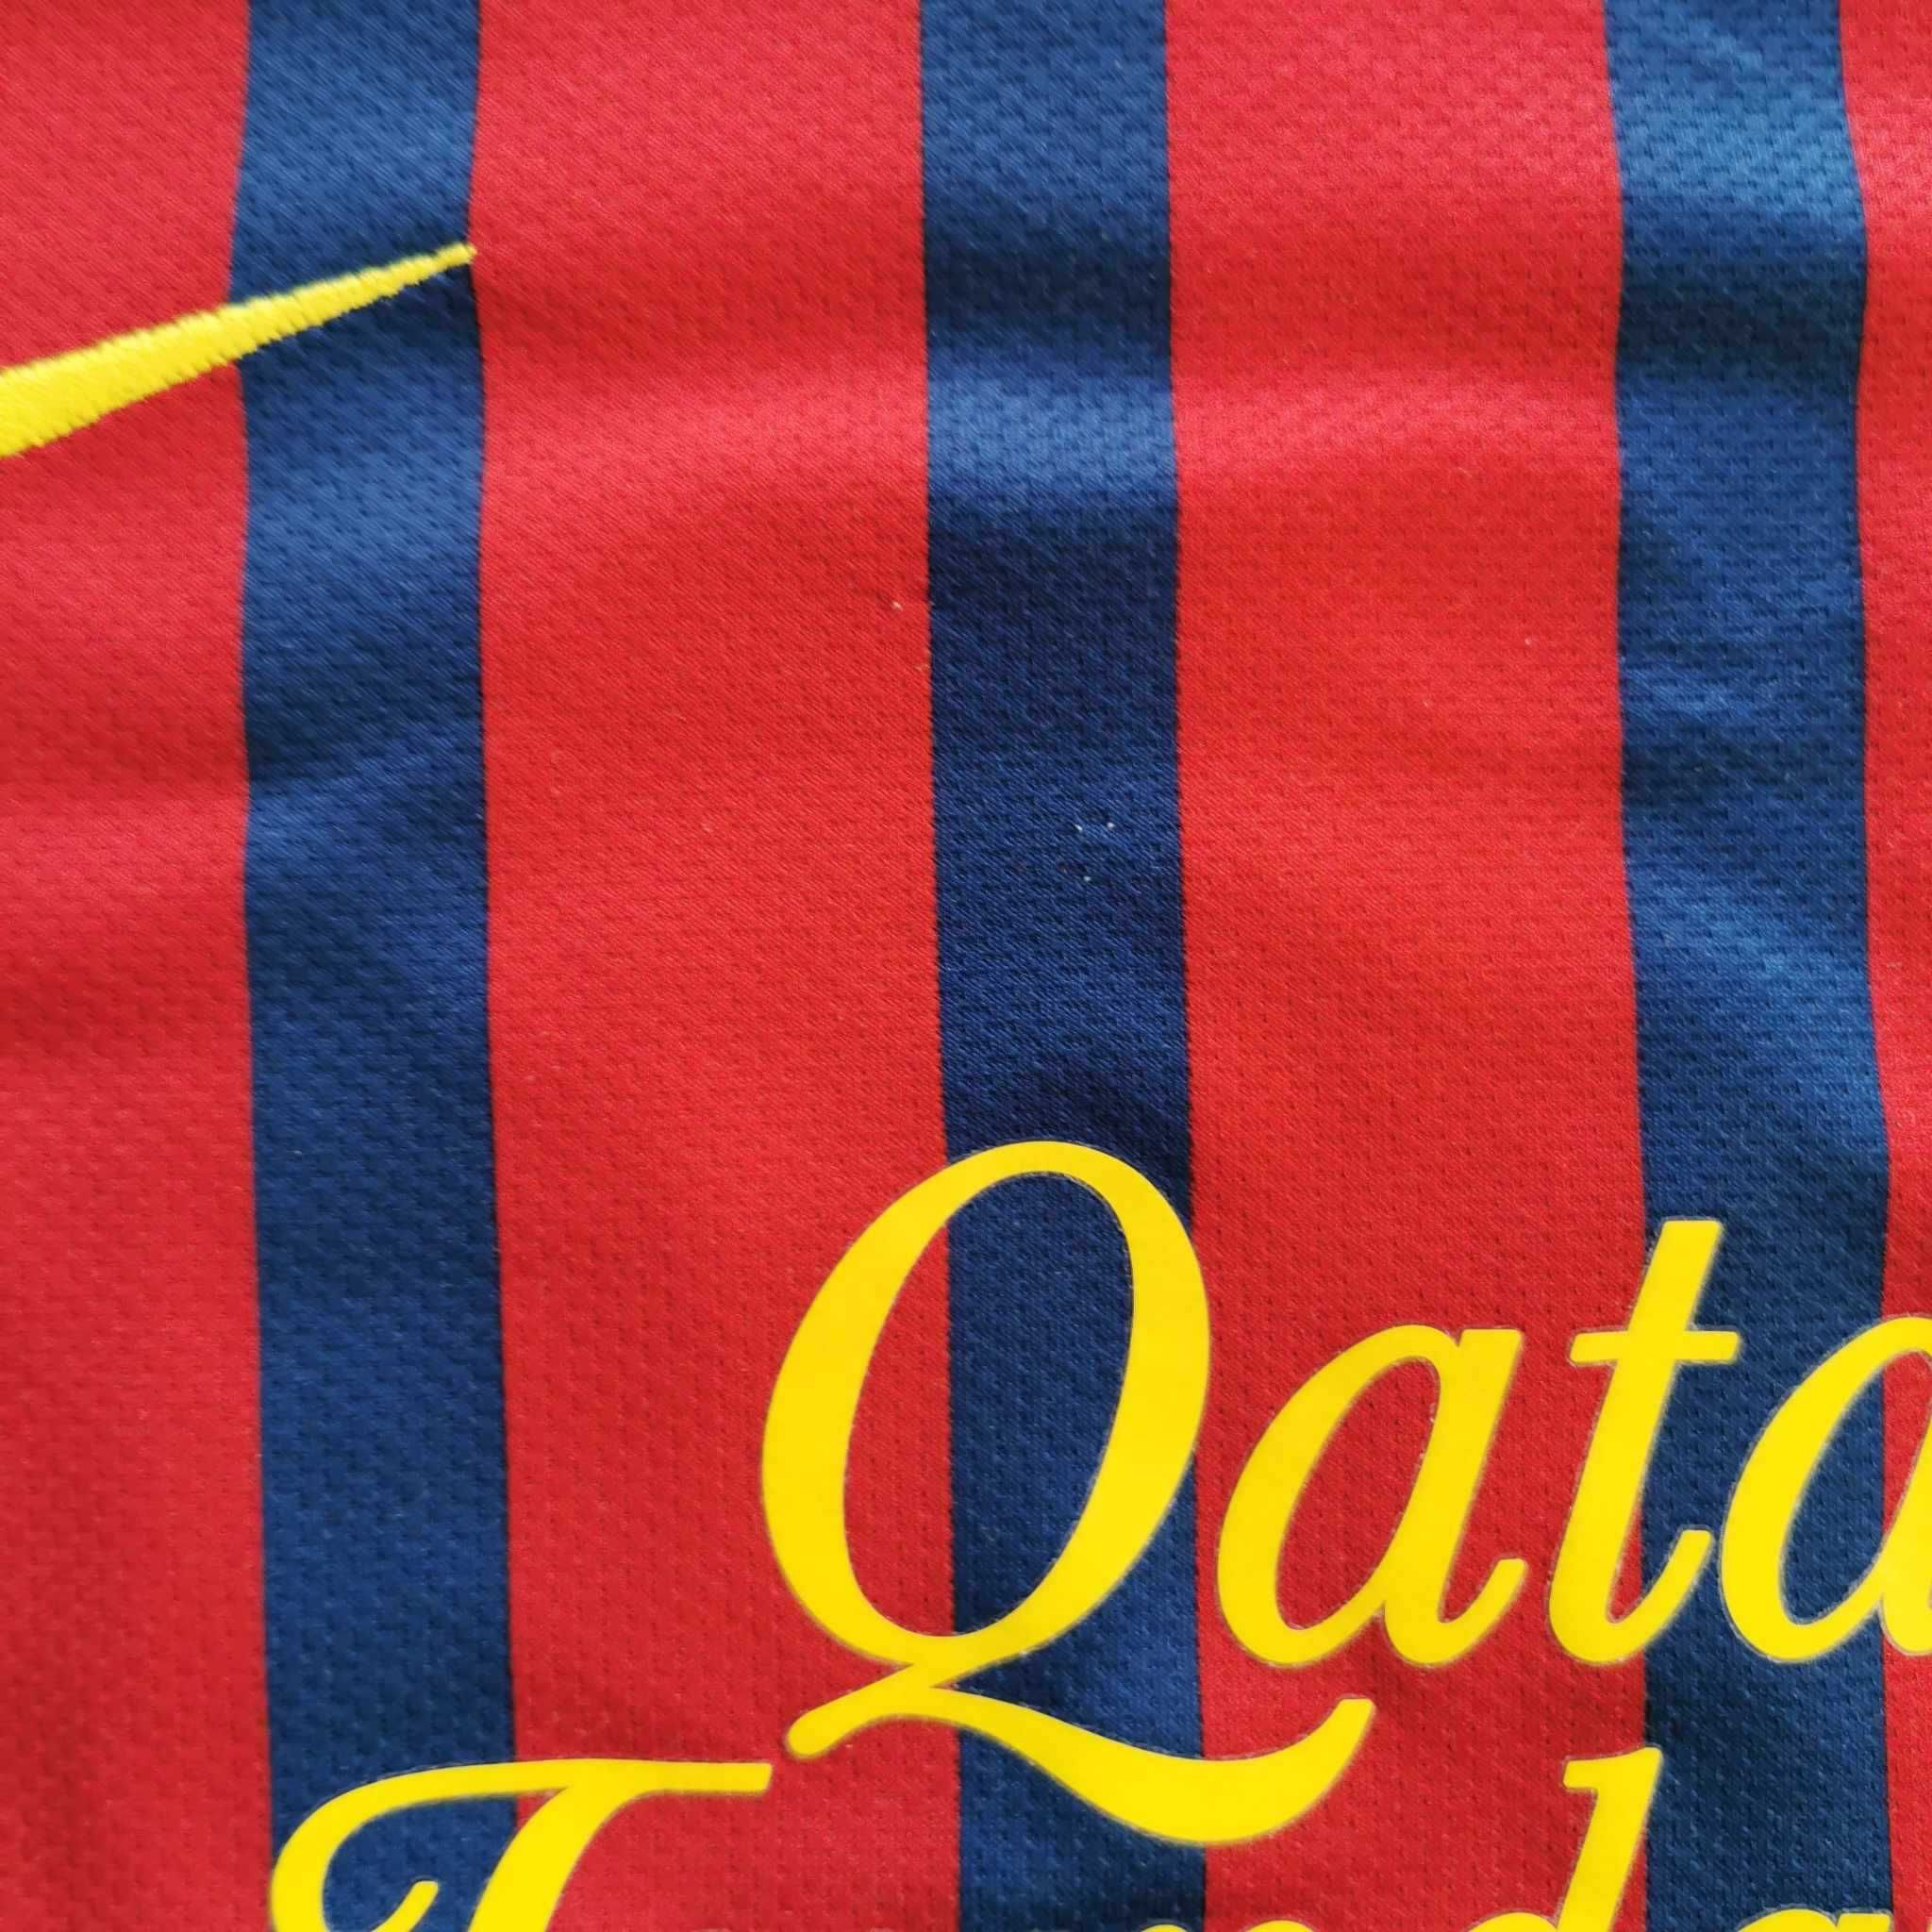 Koszulka Nike FC Barcelona 2011/12 Messi Home (domowa) rozmiar S